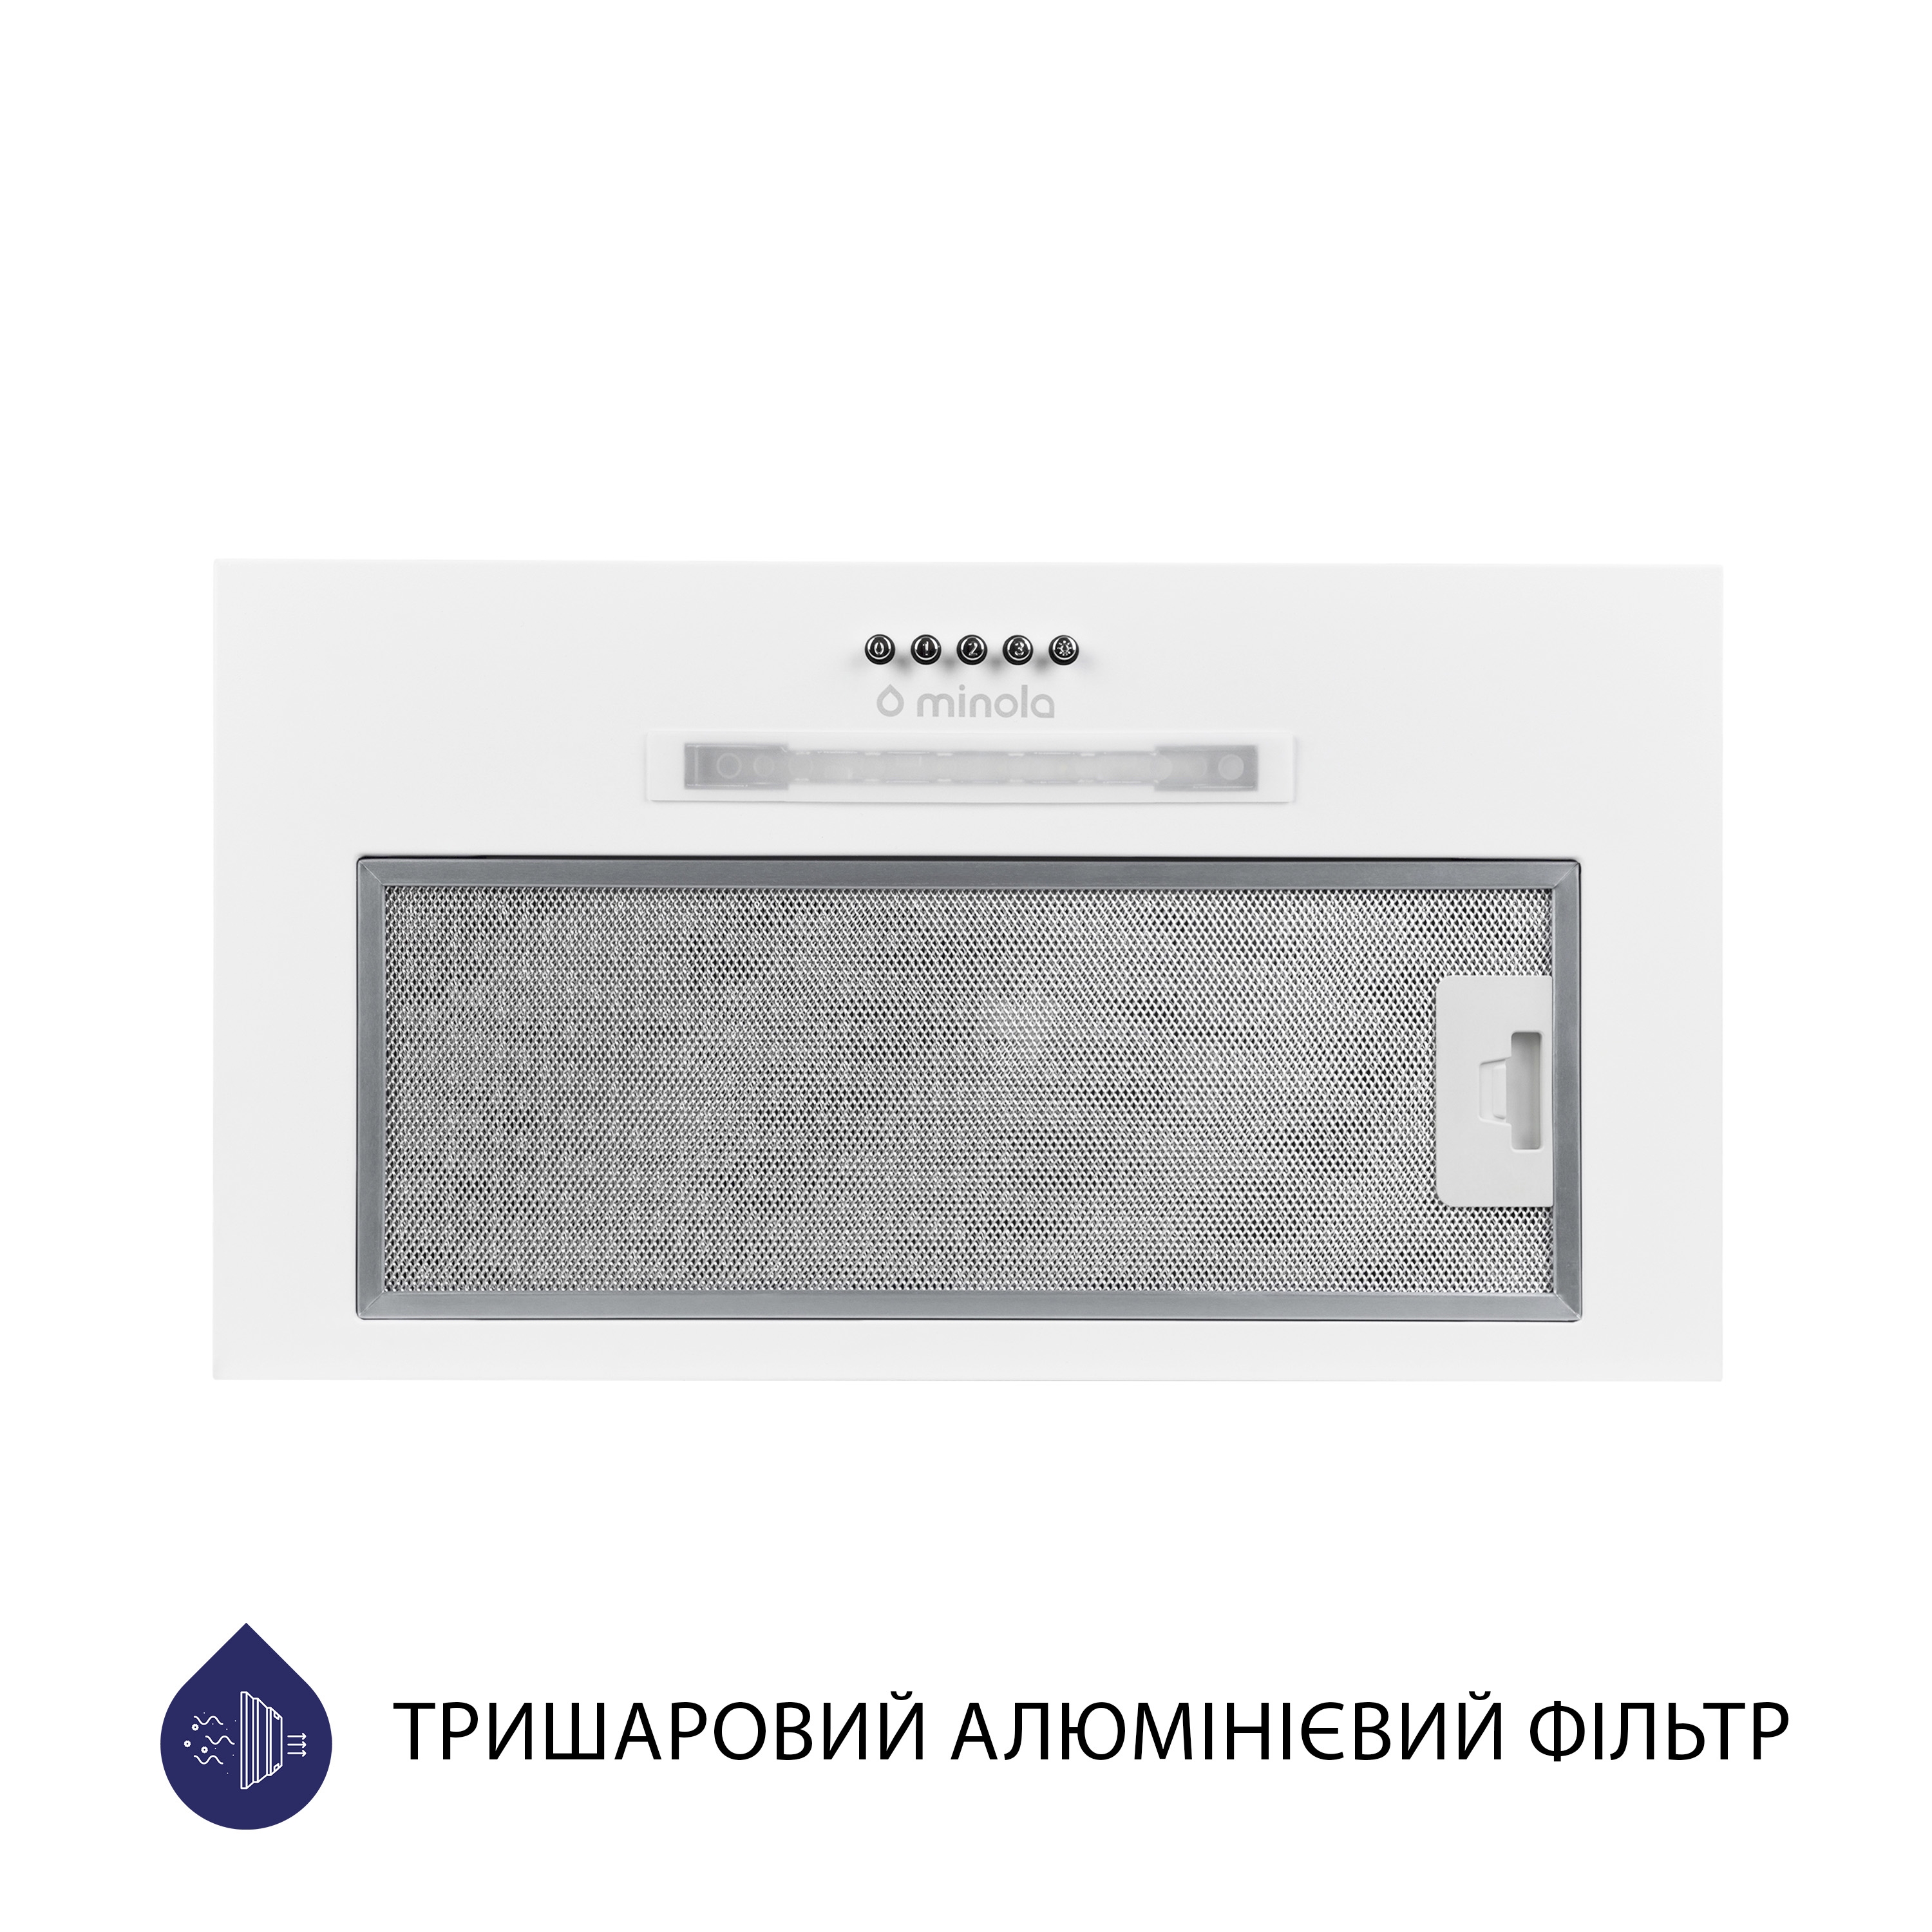 Витяжка кухонная полновстраиваемая Minola HBI 5623 WH 1000 LED цена 0 грн - фотография 2